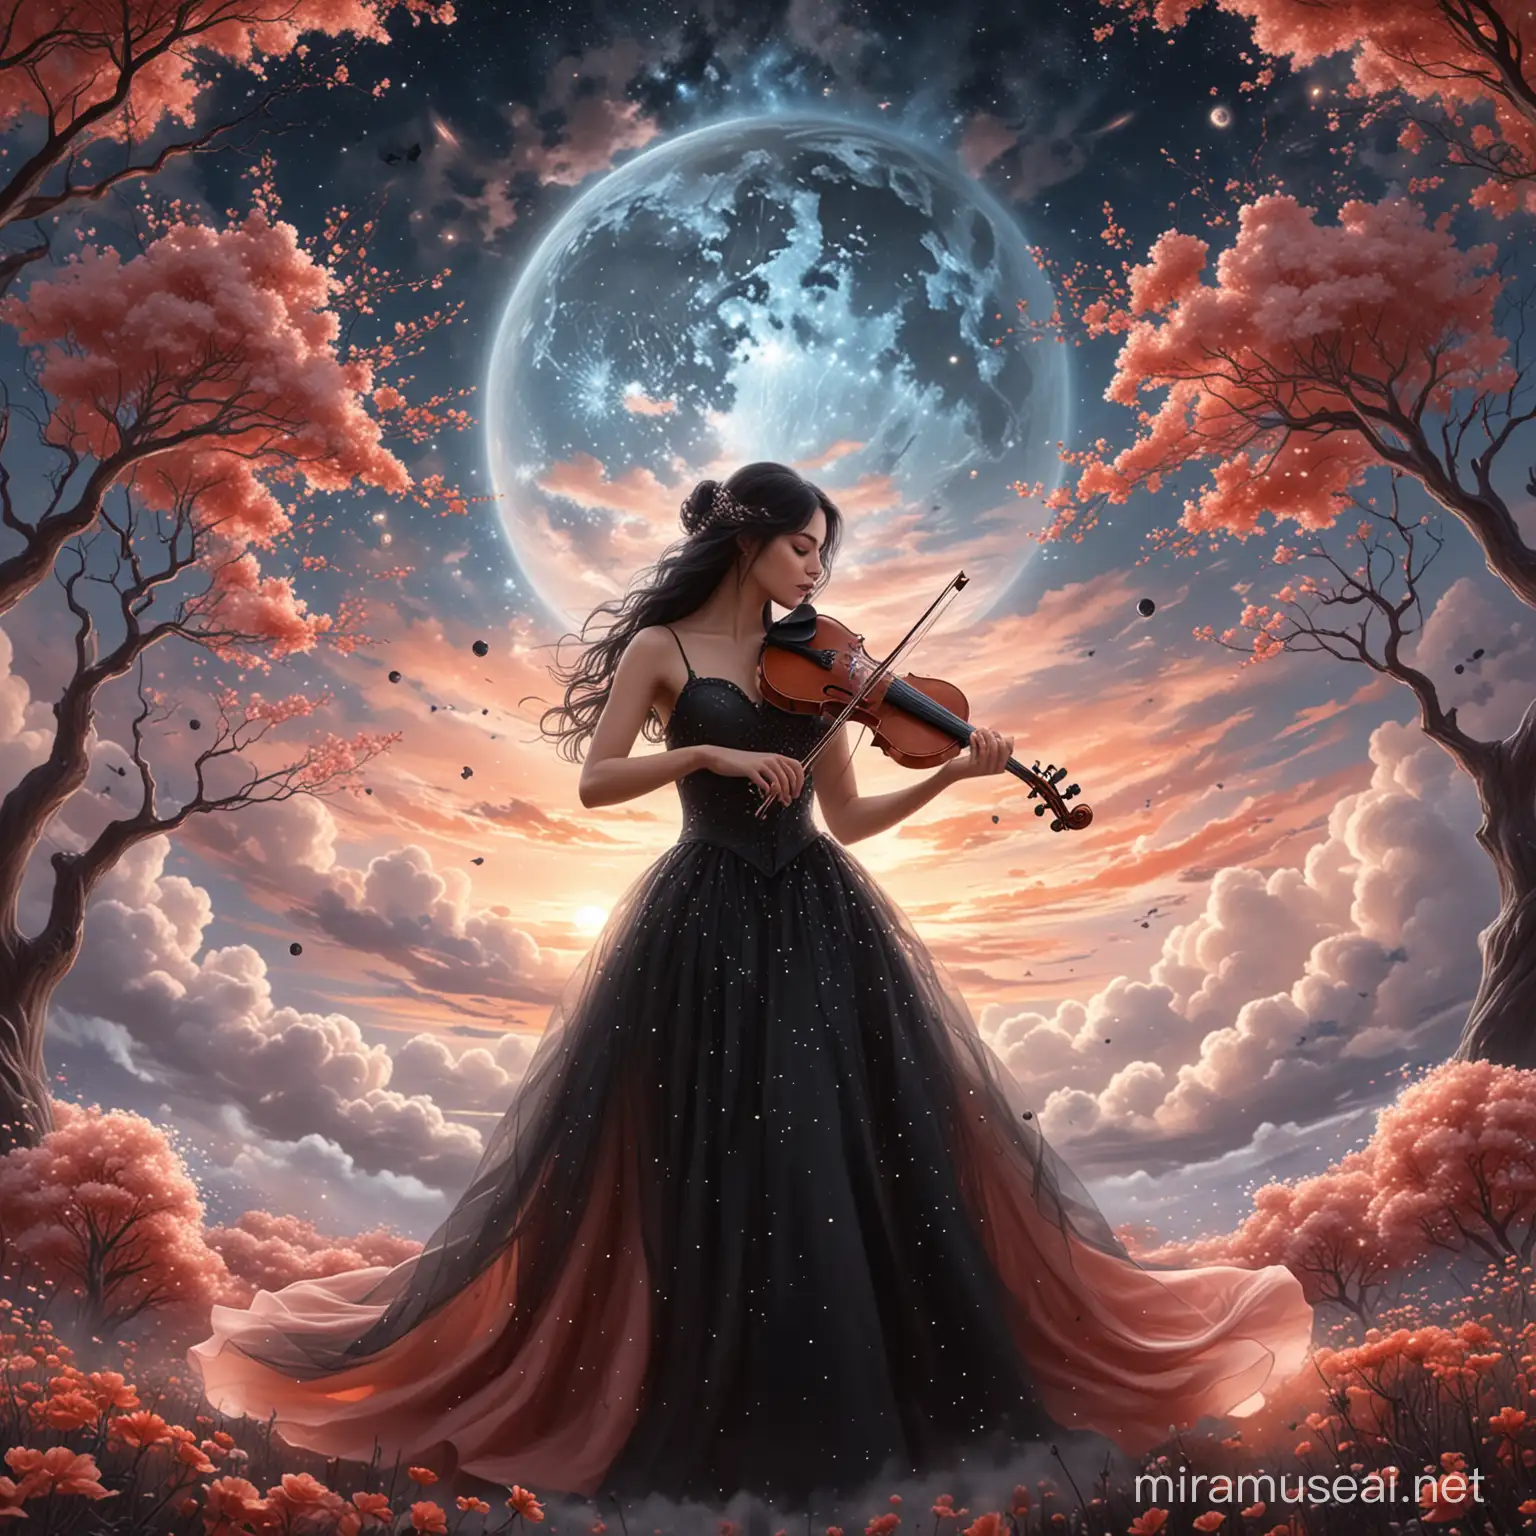 Elegant Woman Playing Violin Amidst Celestial Splendor